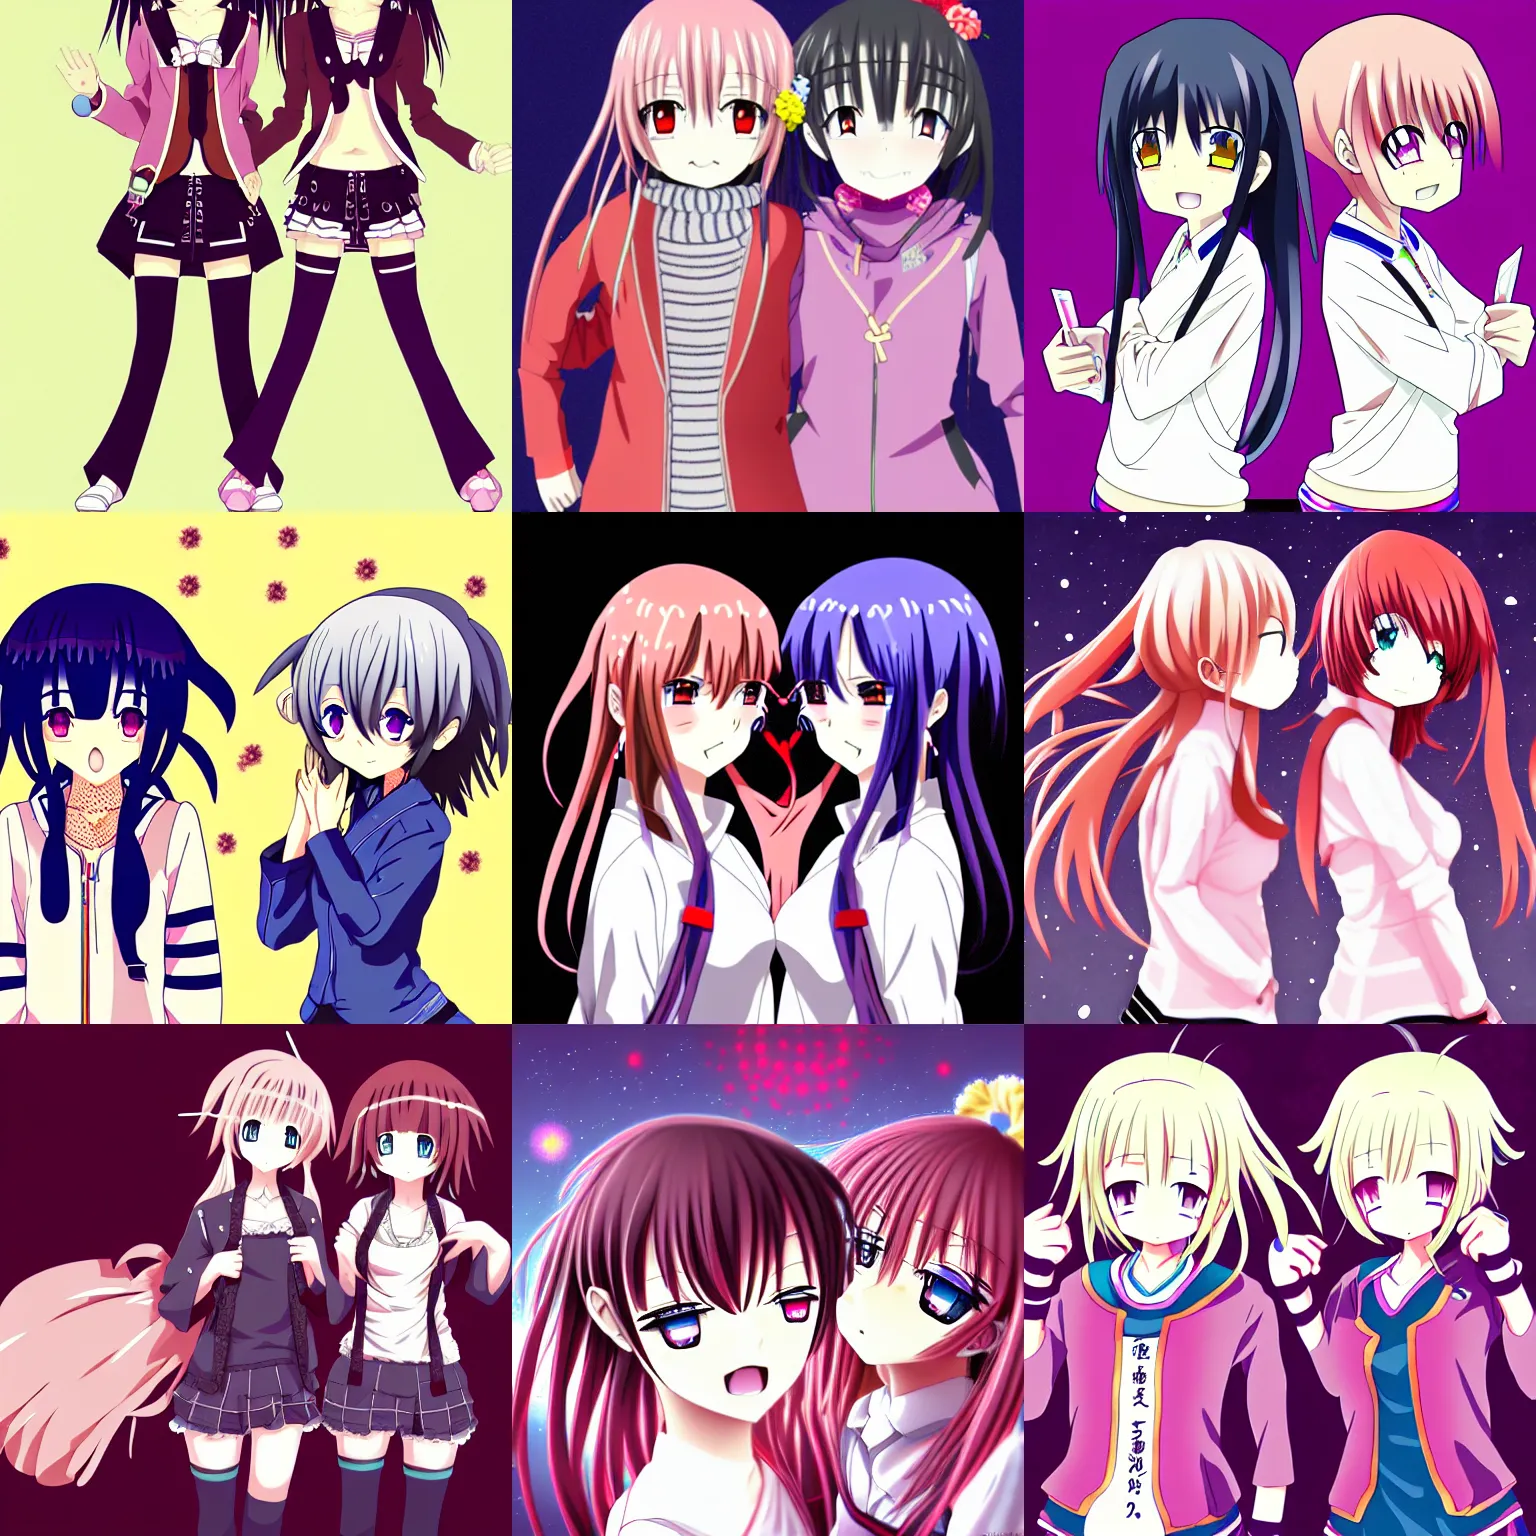 Prompt: two anime girls, mandelbrot, lesbian, stylized, japanese, highly detailed